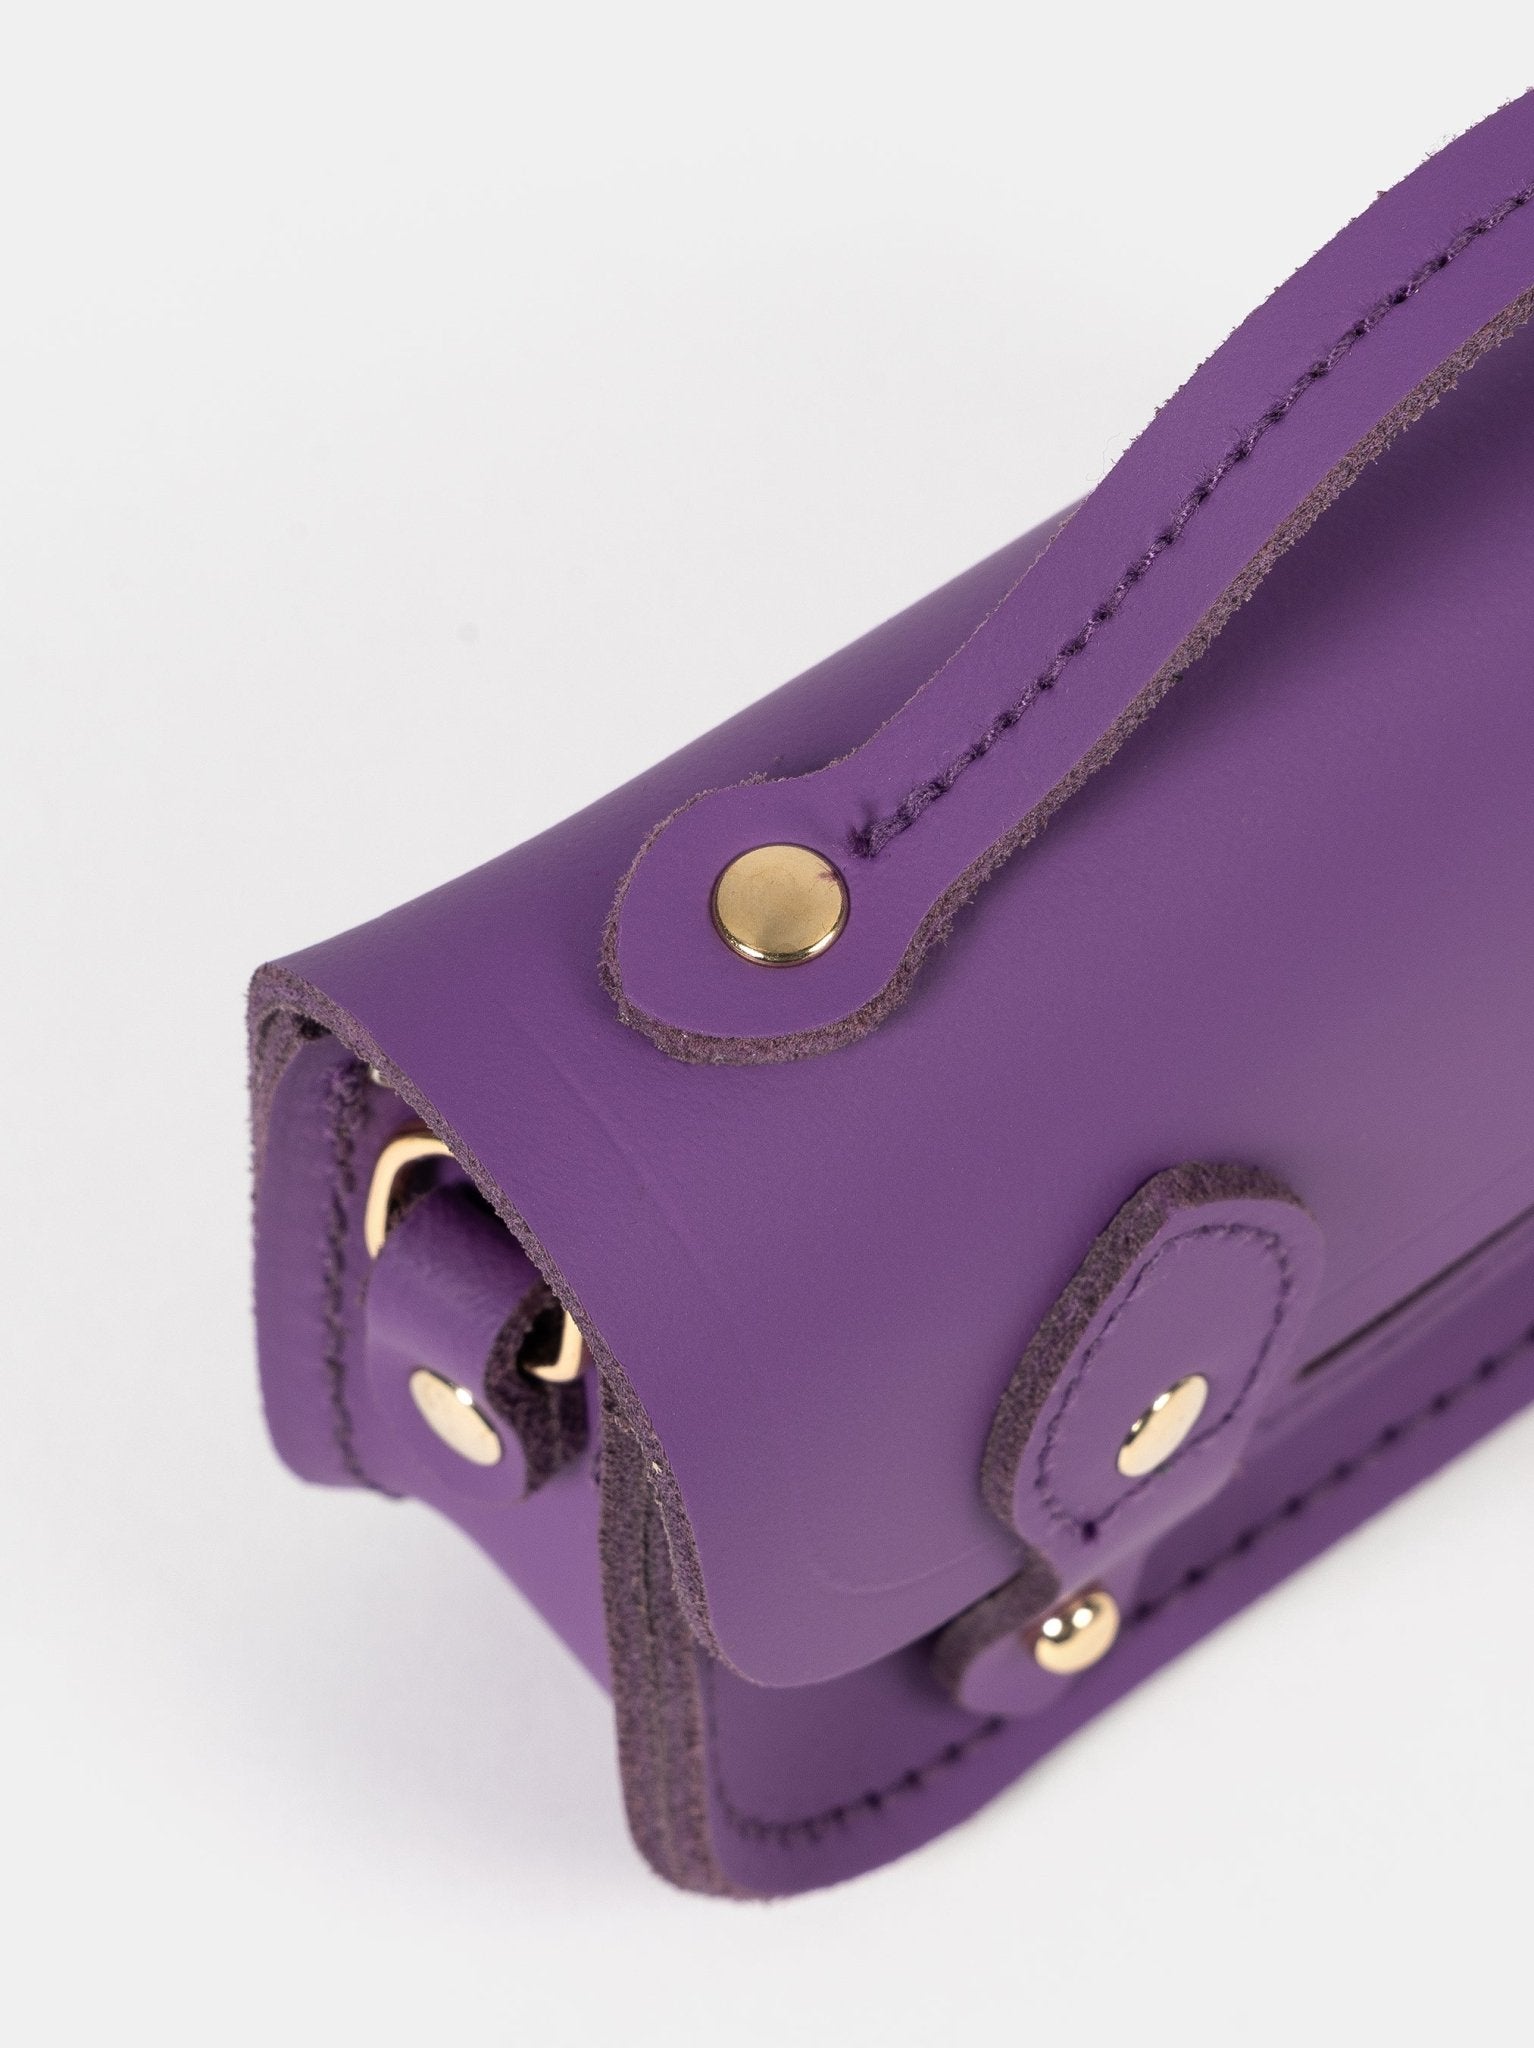 The Micro Satchel - Purple Sapphire Matte - The Cambridge Satchel Company EU Store